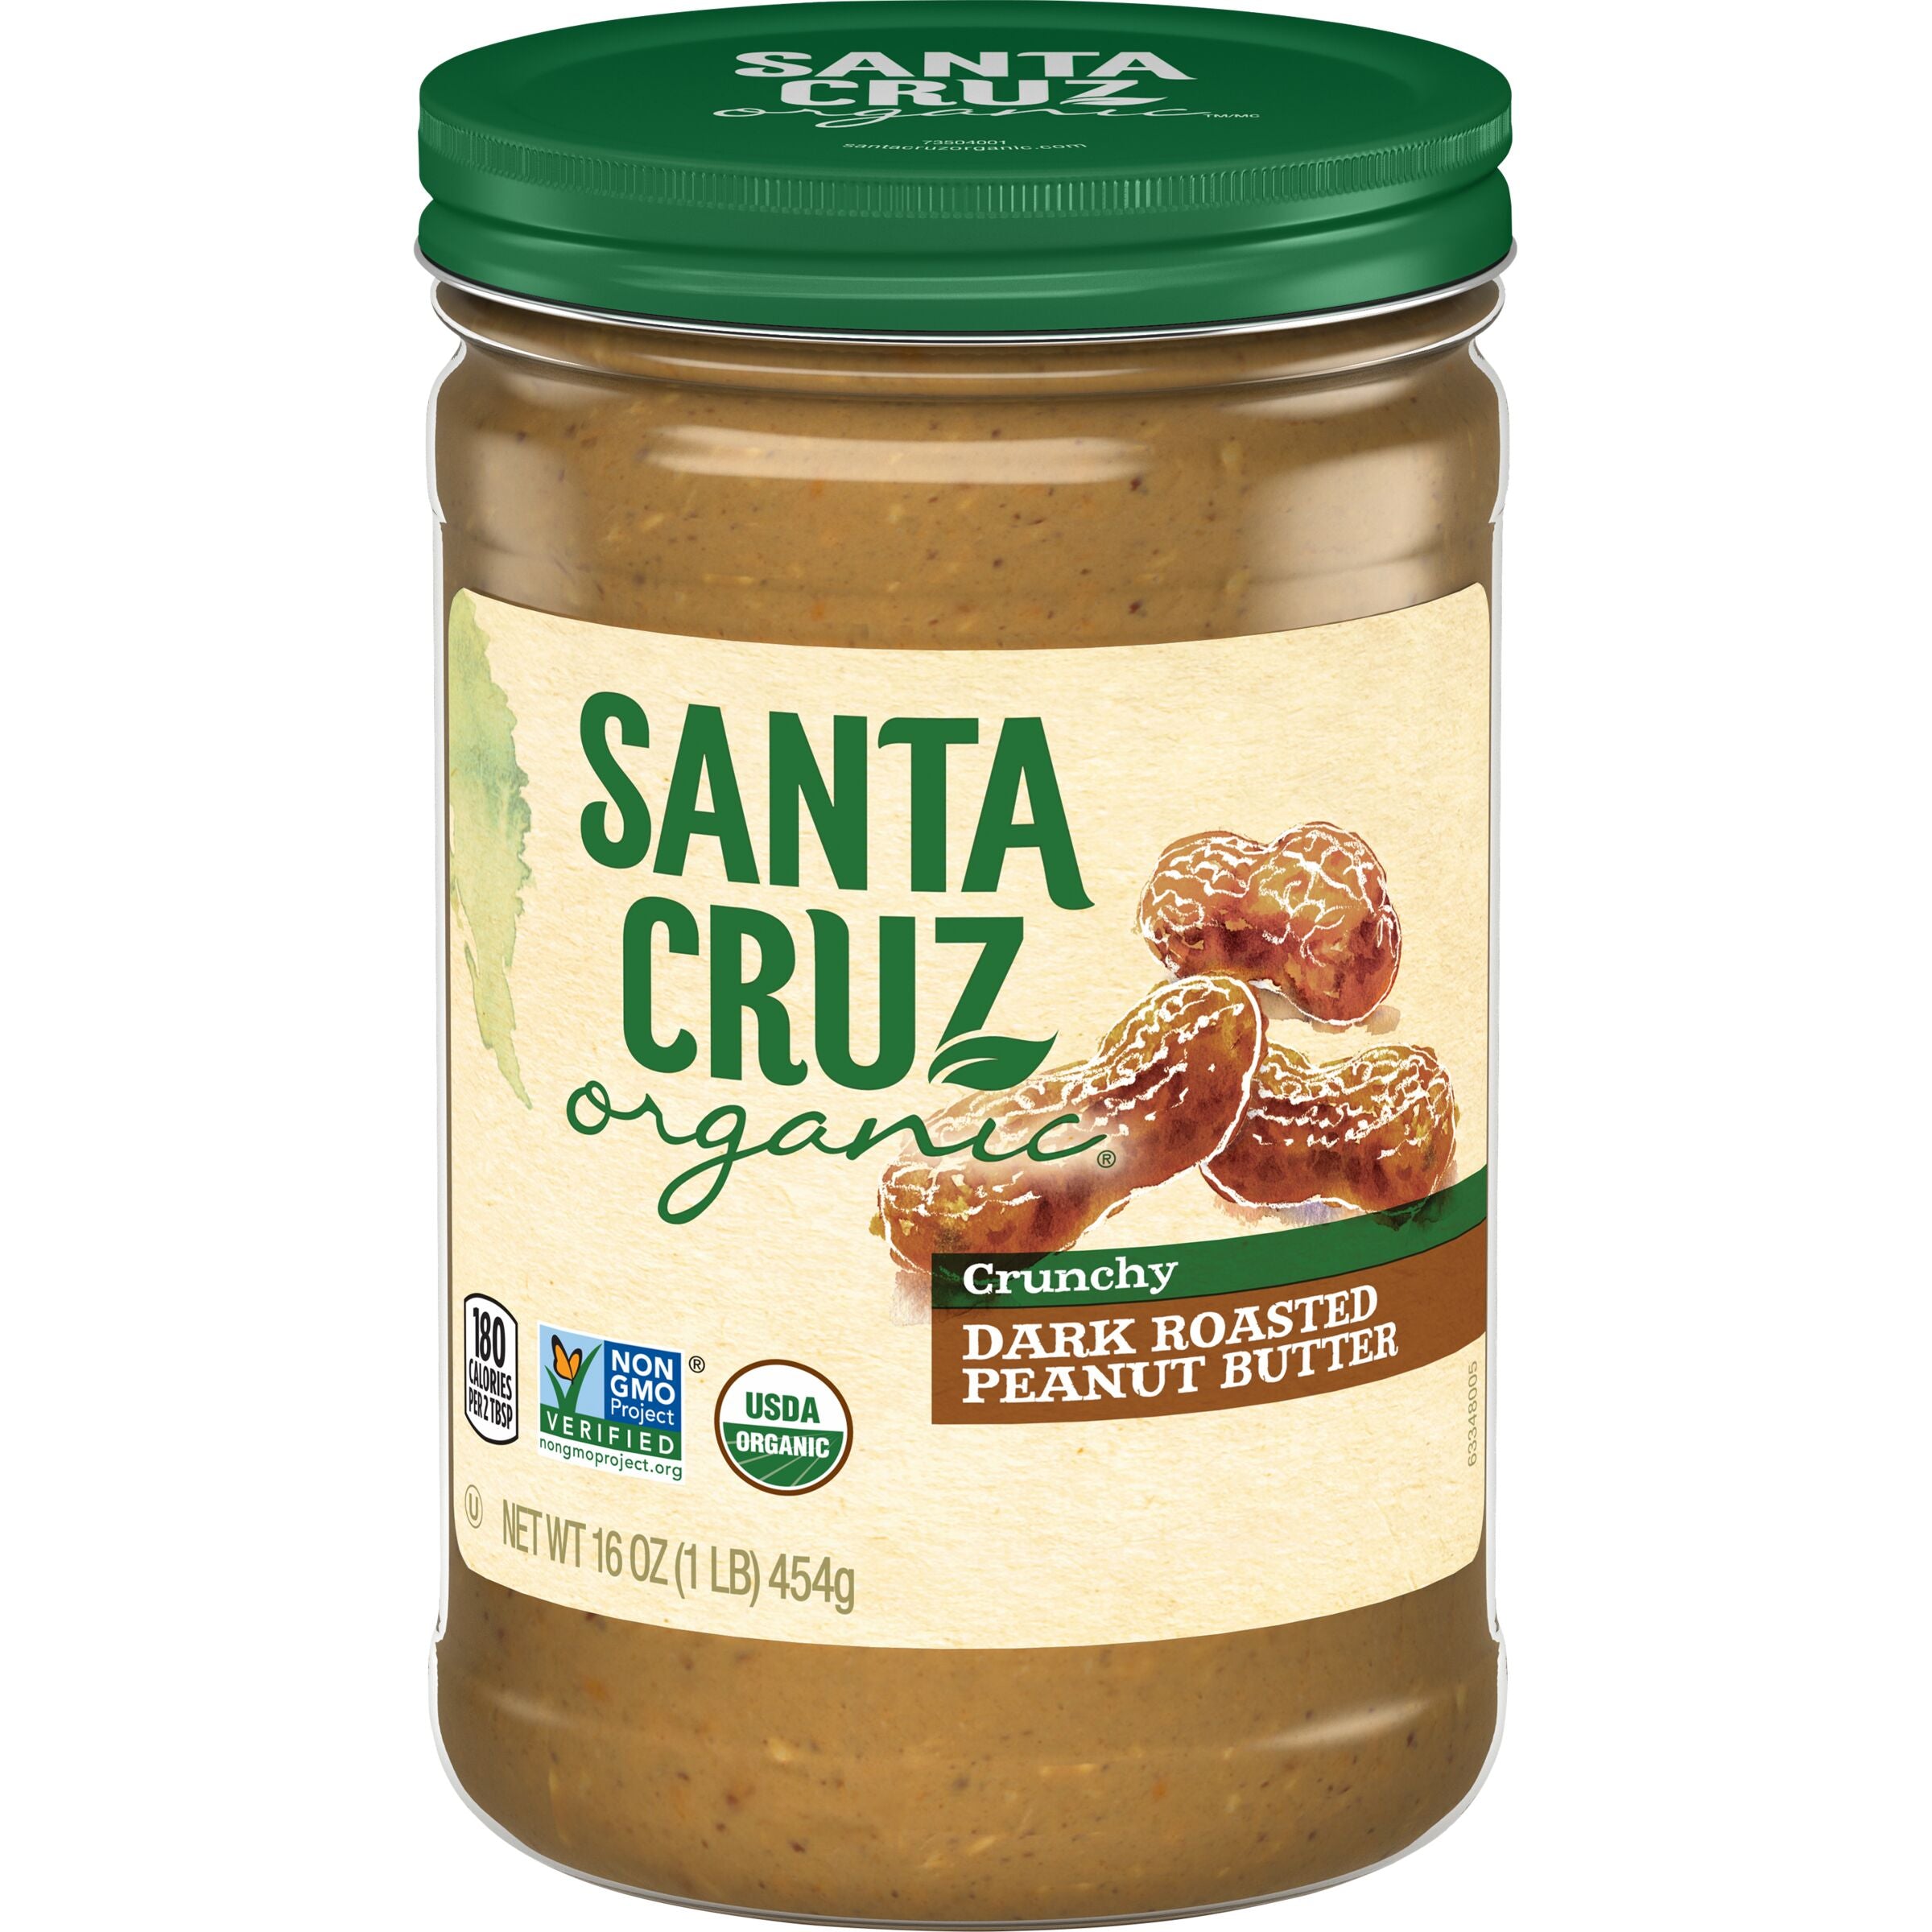 Santa Cruz Organic Crunchy Dark Roasted Peanut Butter, 16 oz